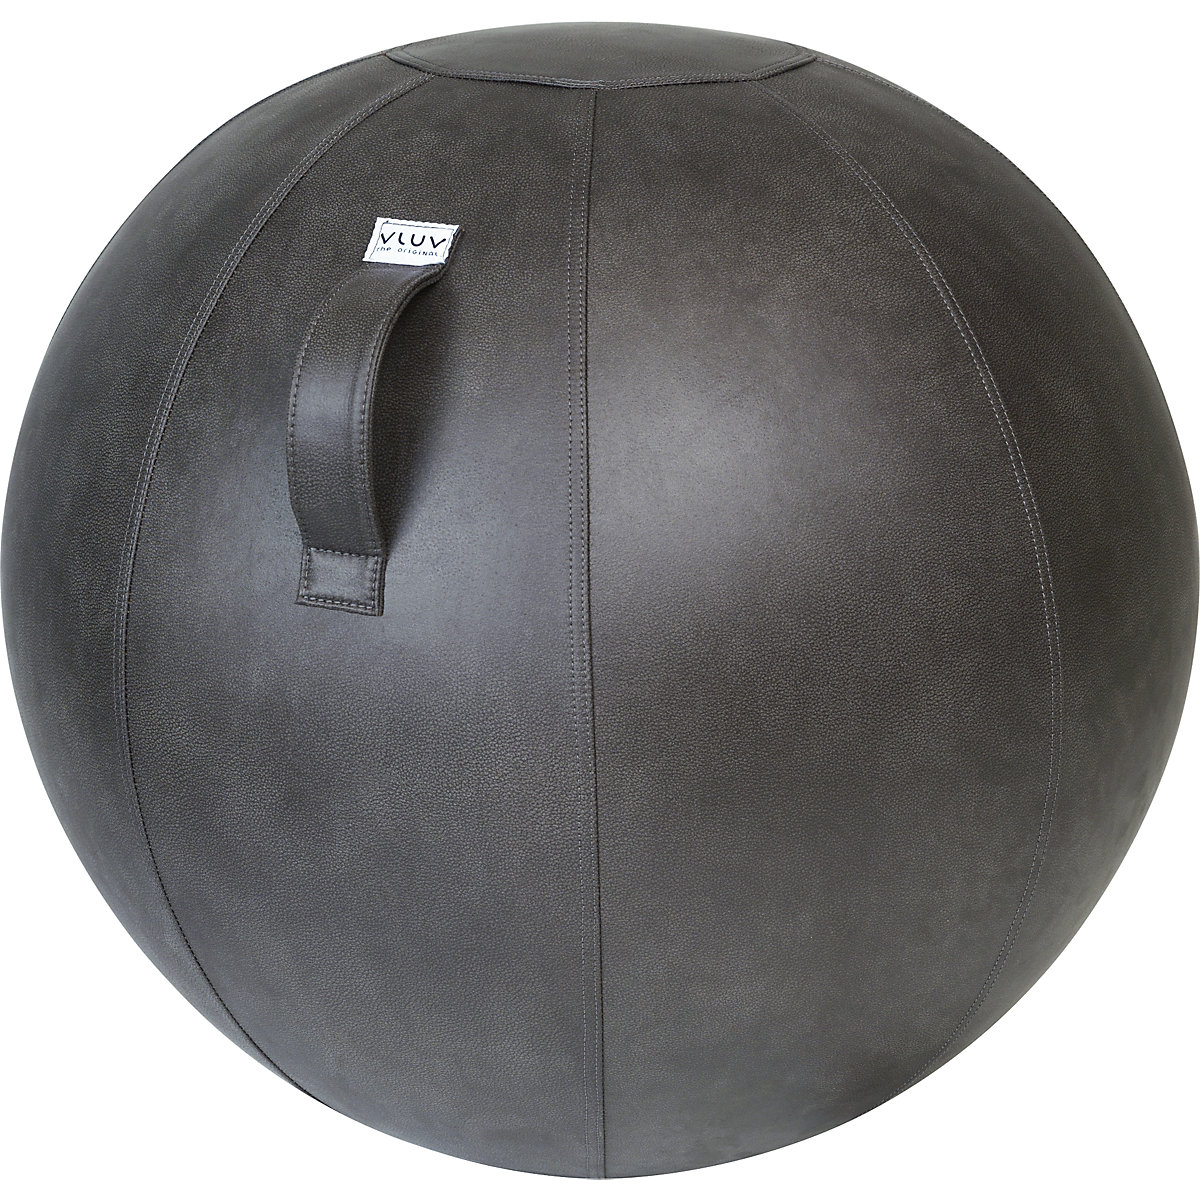 VEEL Swiss ball – VLUV, microfibre vinyl, 700 – 750 mm, elephant